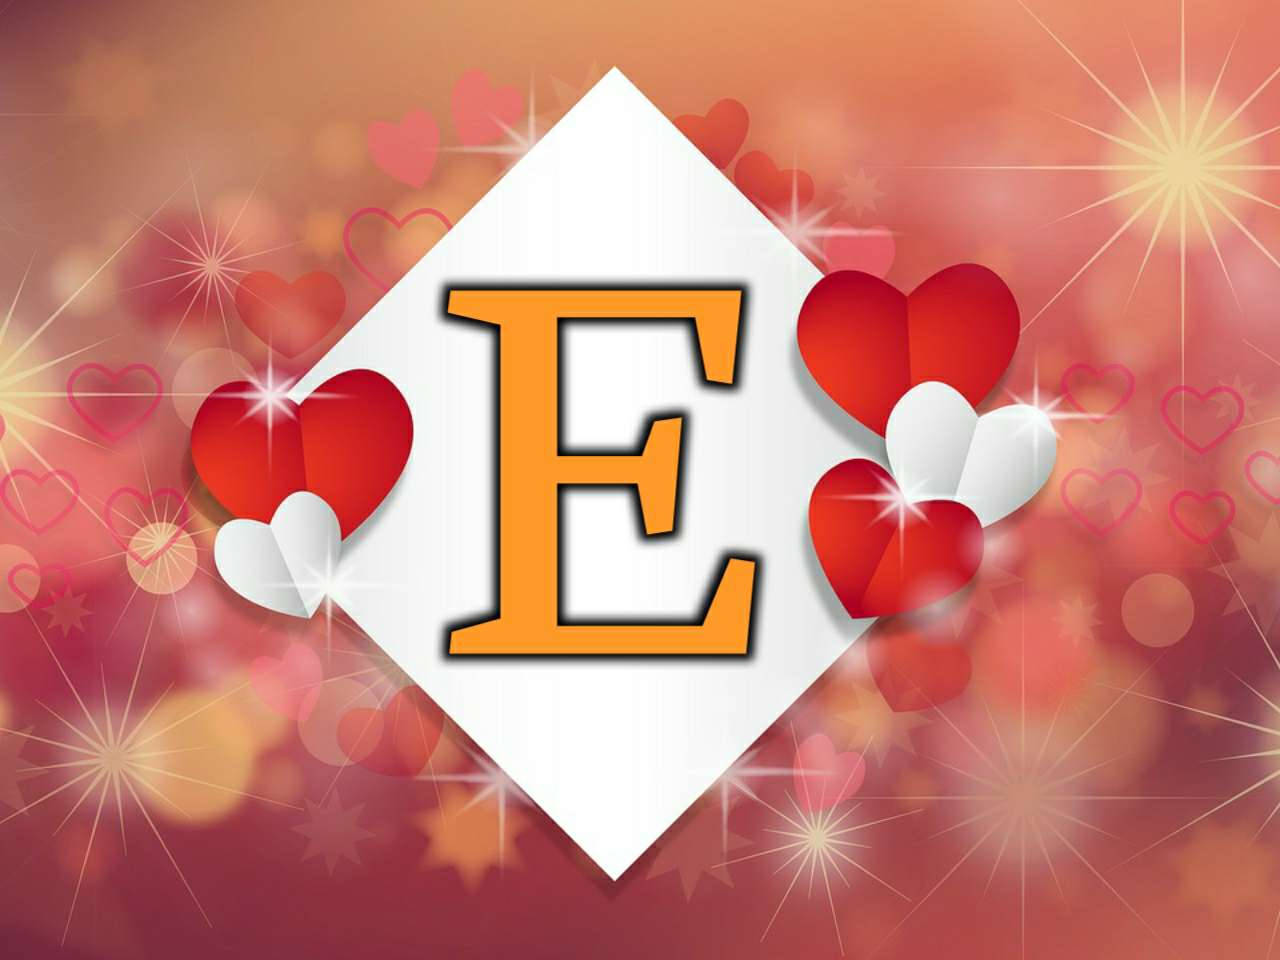 Letter E Hearts Background